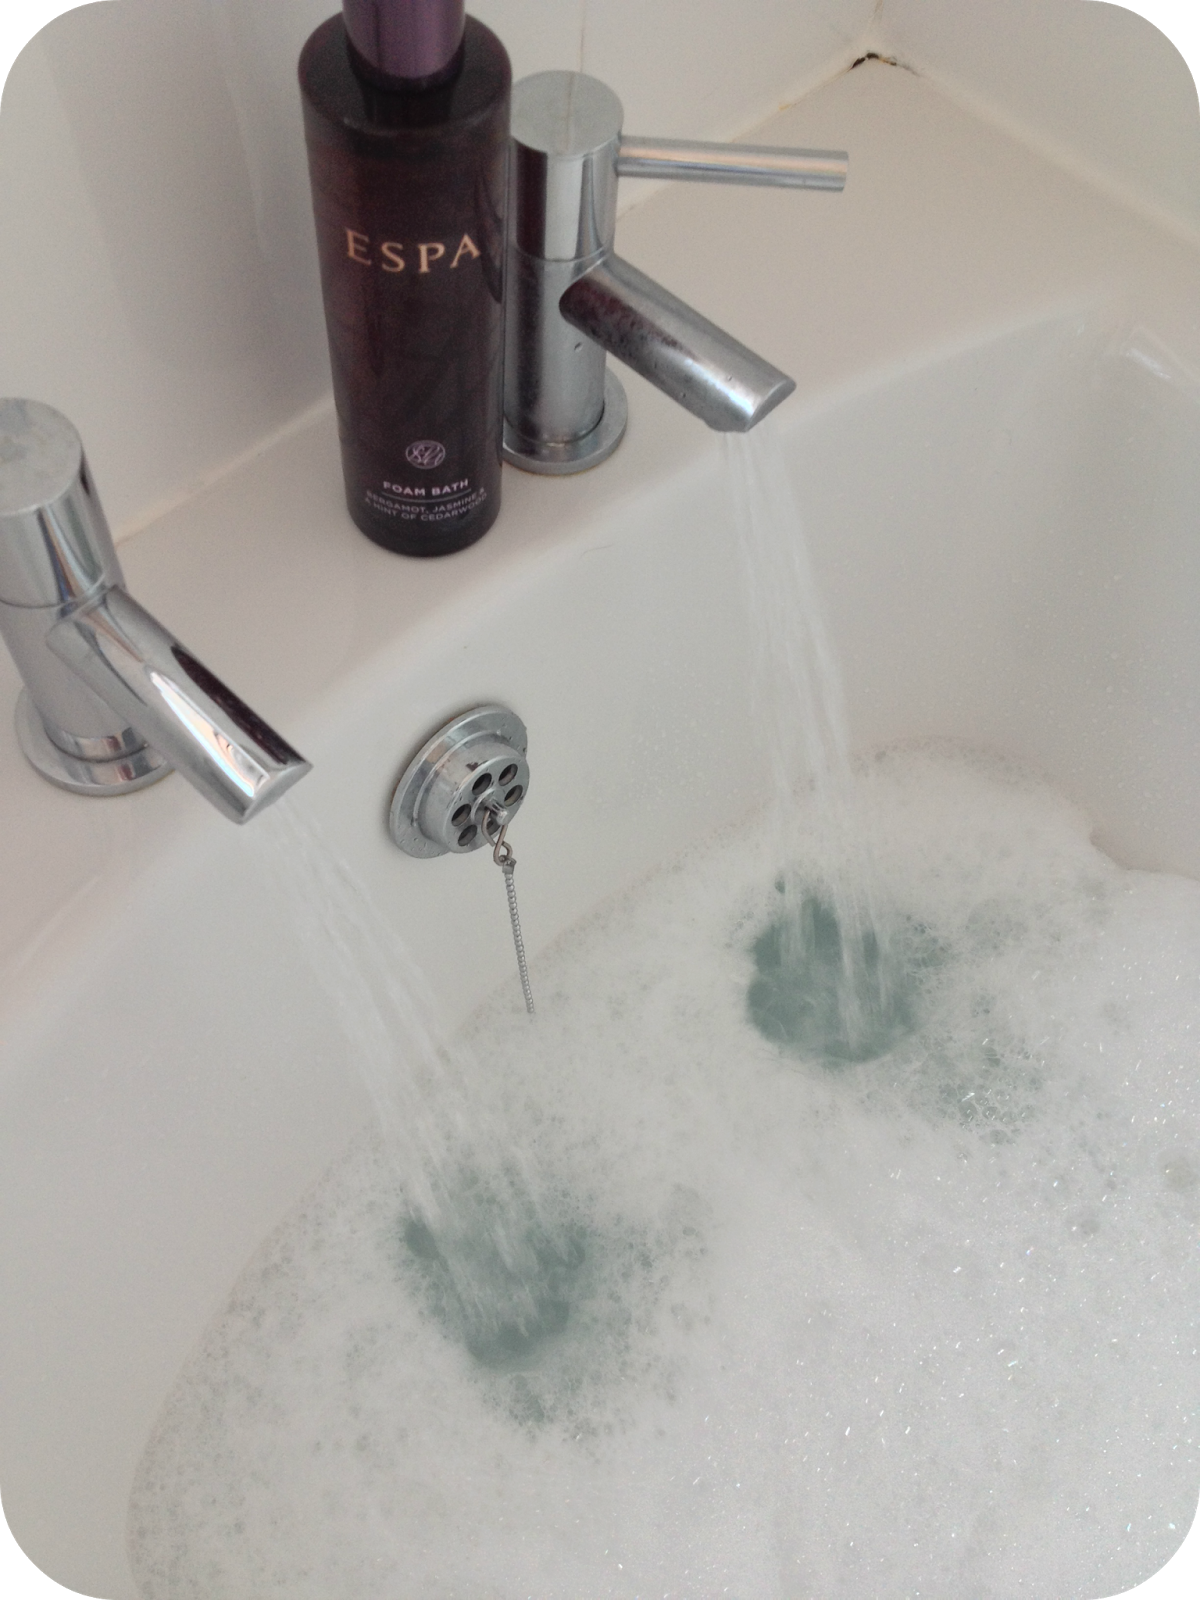 espa foam bath review